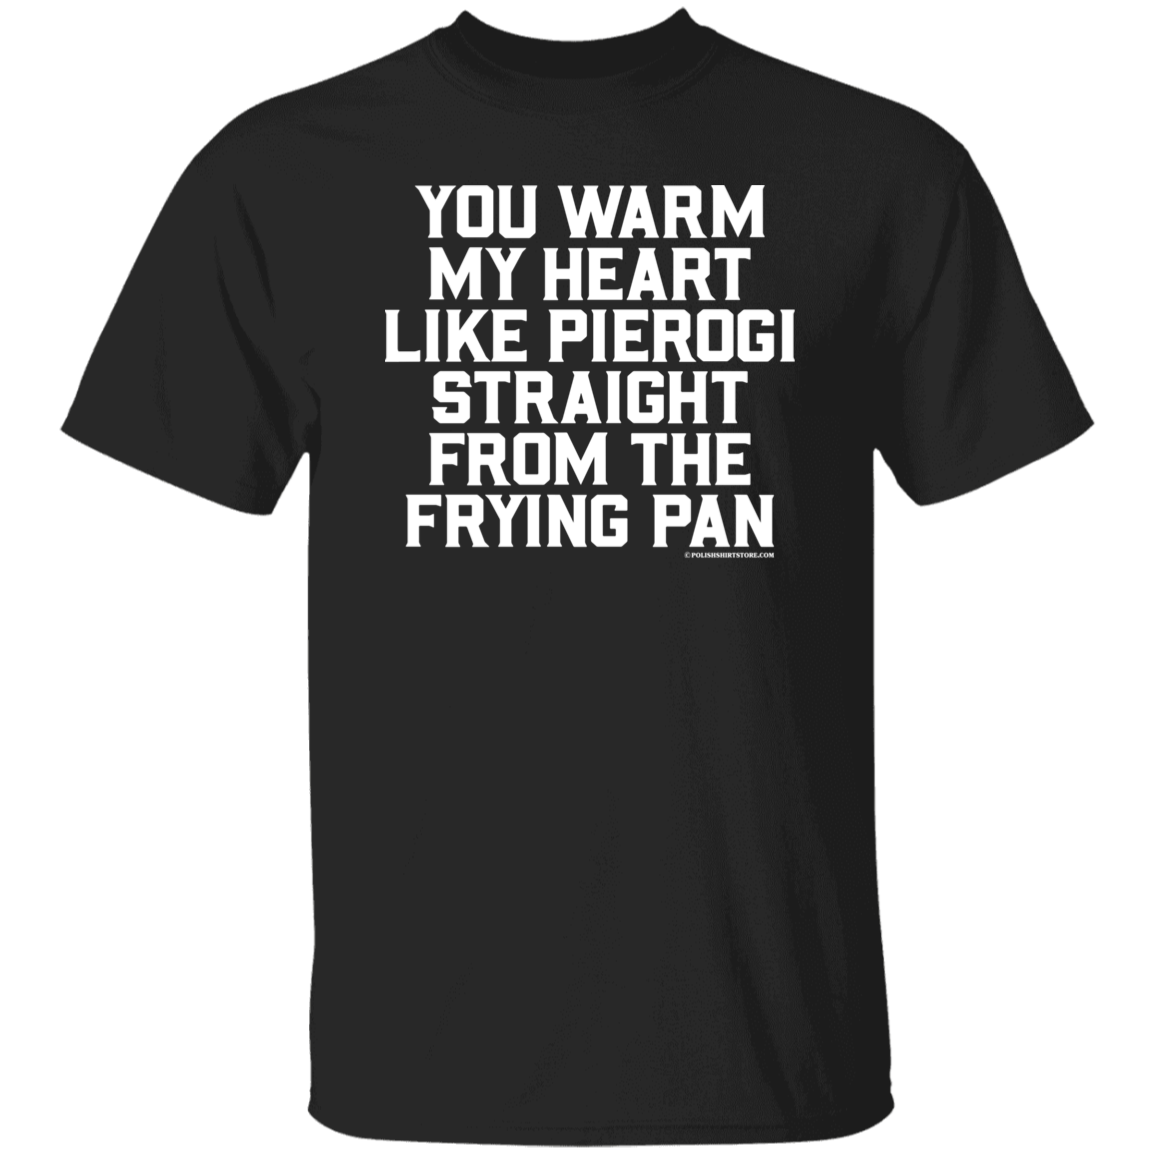 You Warm My Heart Like Pierogi Straight From The Frying Pan Apparel CustomCat G500 5.3 oz. T-Shirt Black S